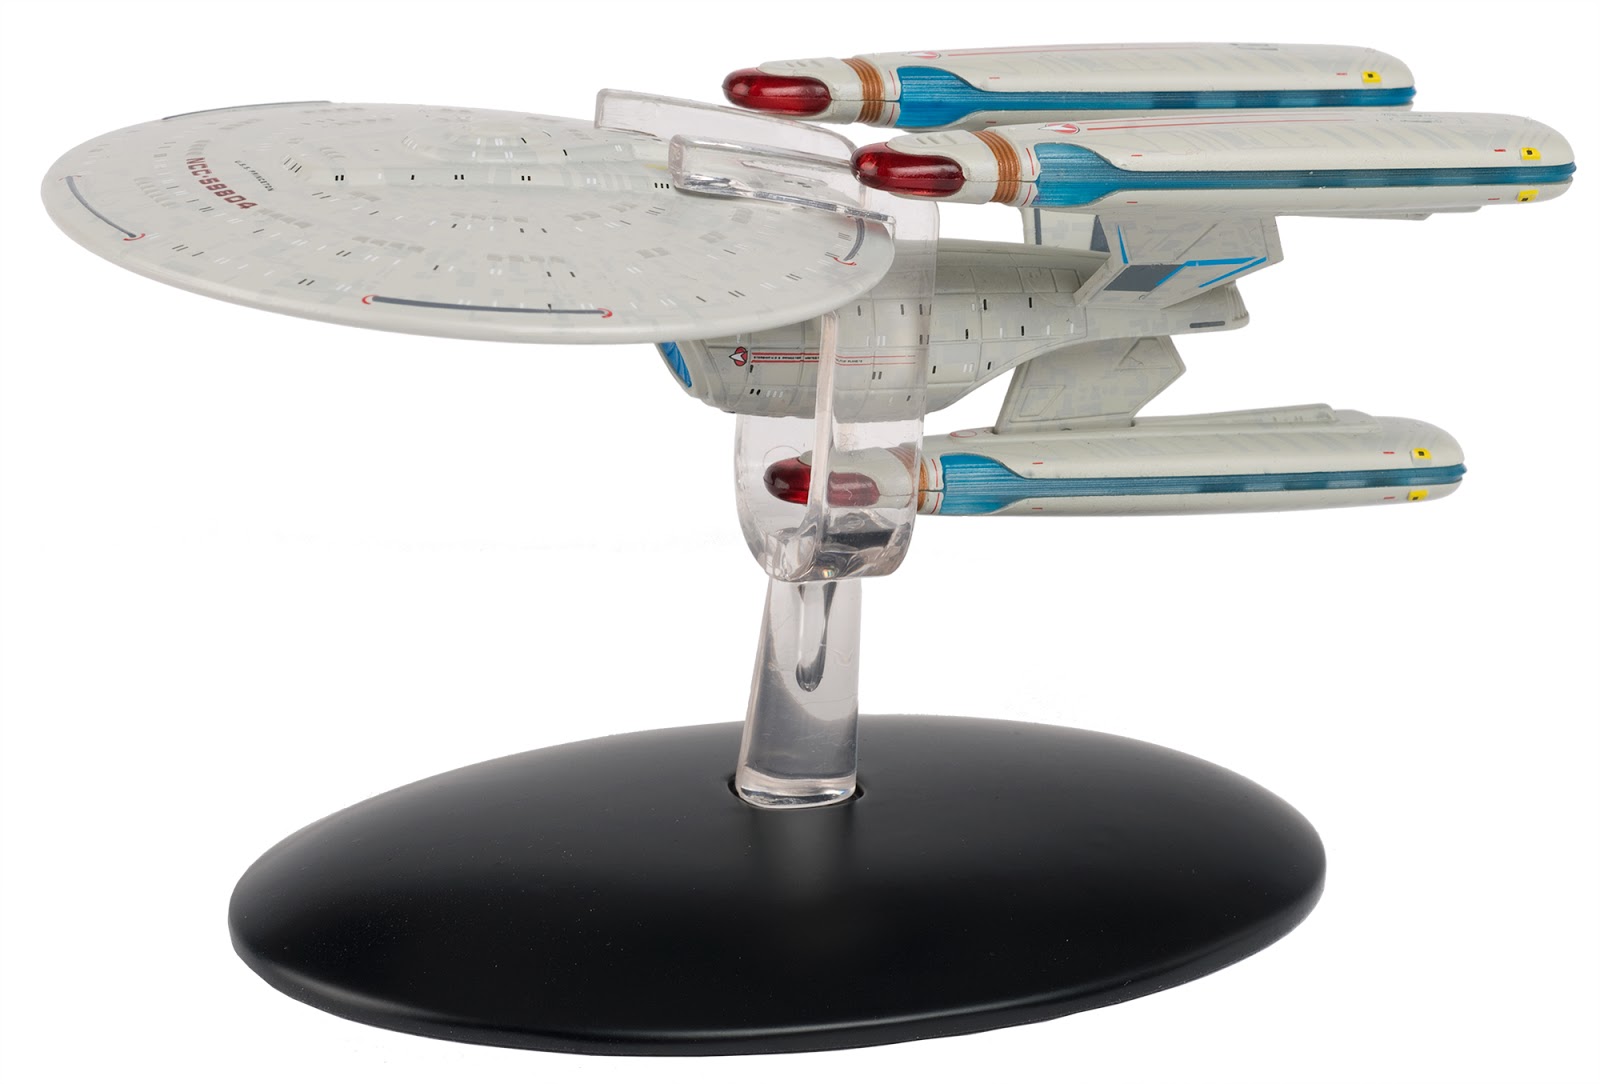 Star Trek nave espacial modelos-Eaglemoss #100-149 TNG Voyager ds9 Enterprise 